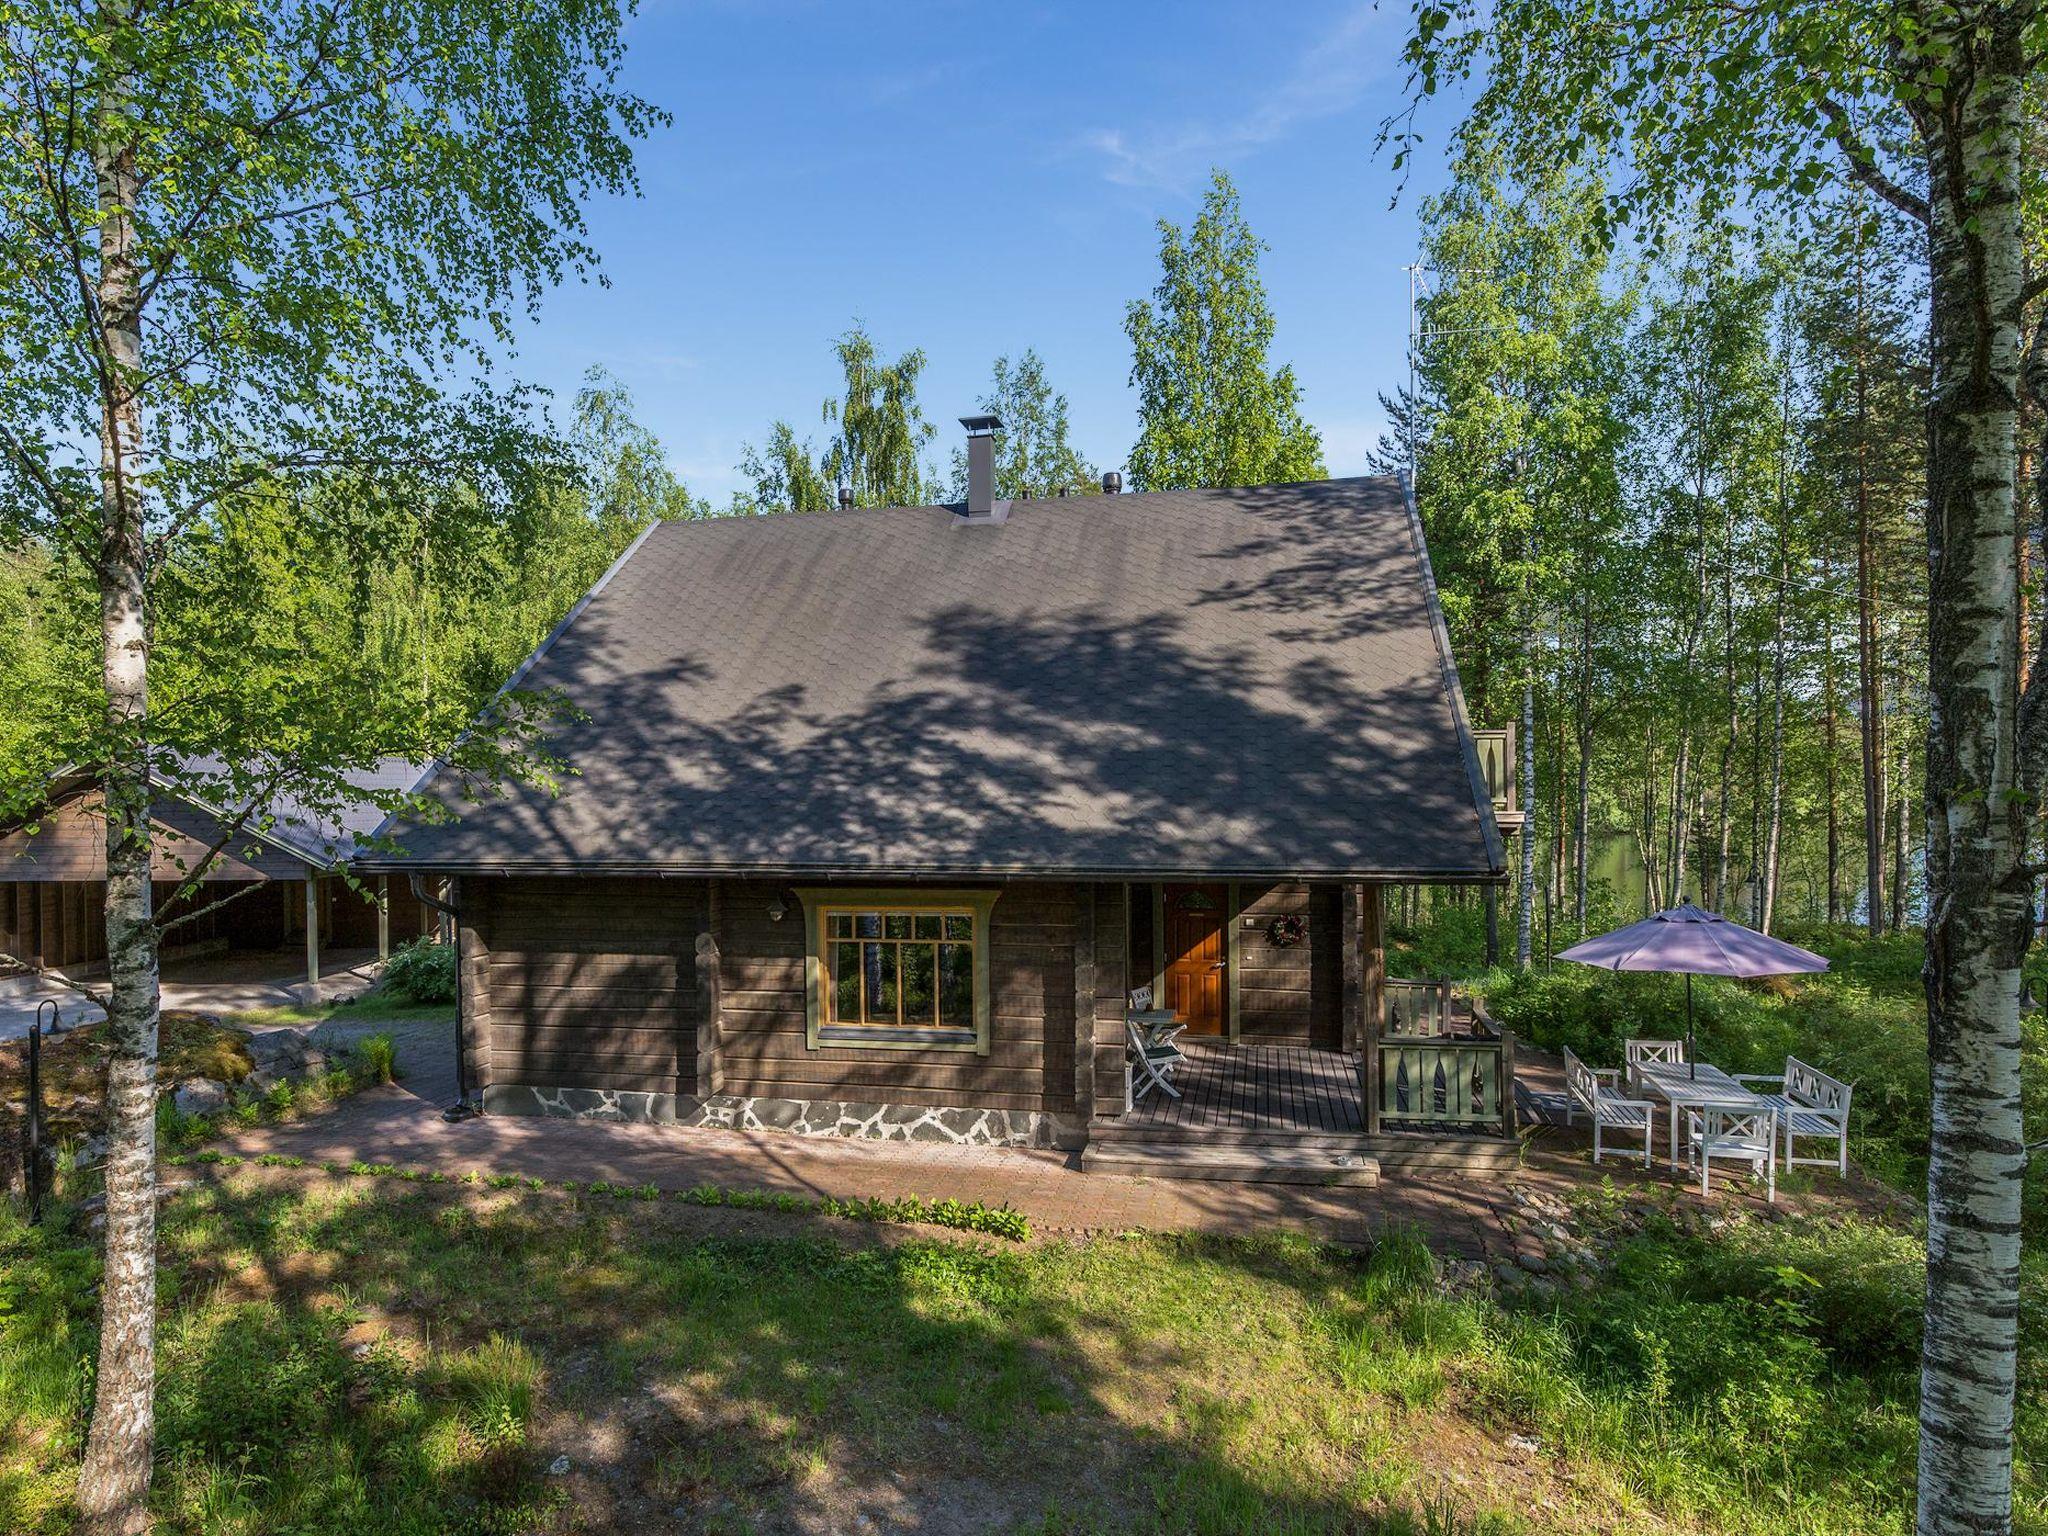 Photo 5 - 3 bedroom House in Mikkeli with sauna